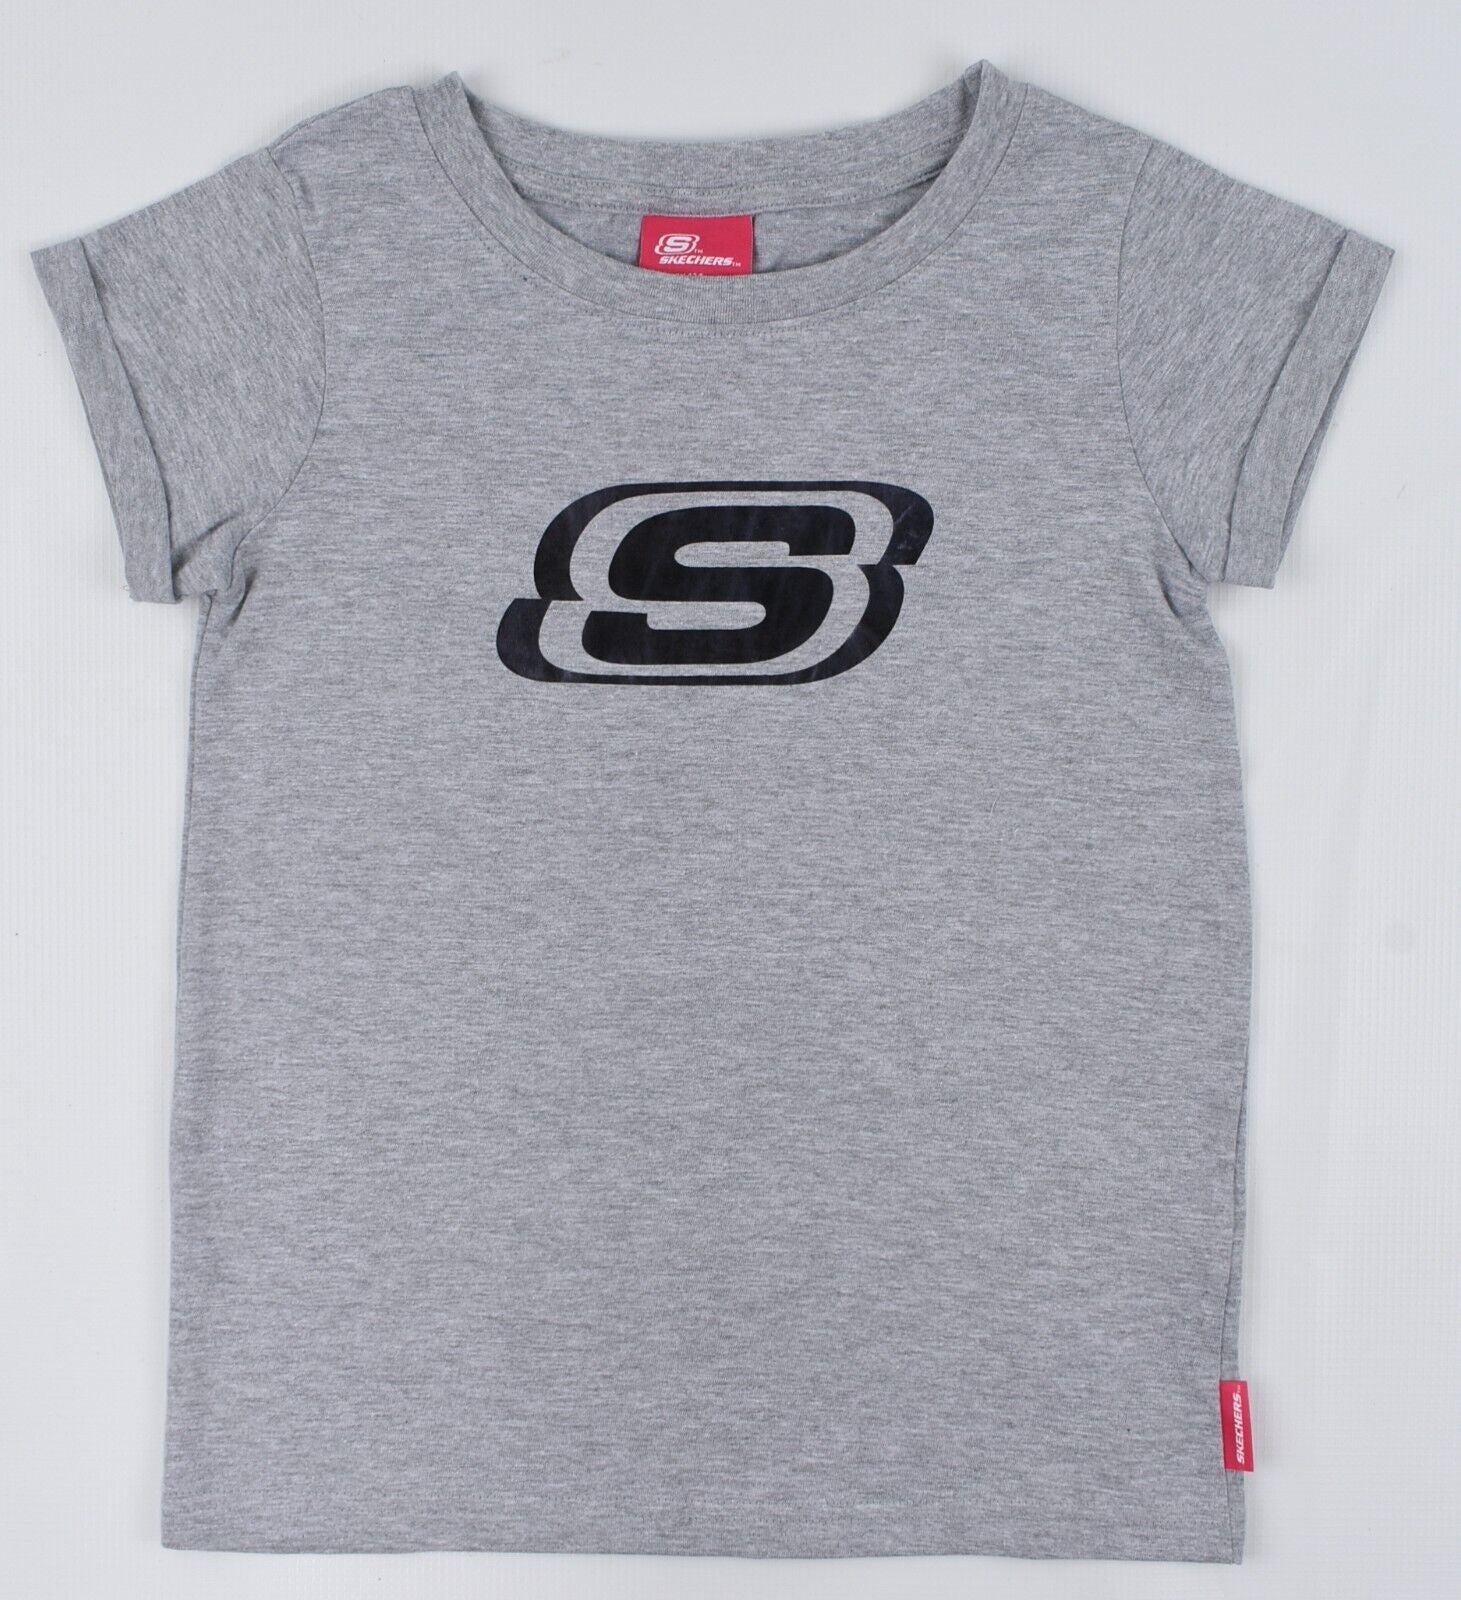 SKECHERS Girls' Kids' Crew Neck Logo T-shirt, Grey/Black Logo, size 10 years